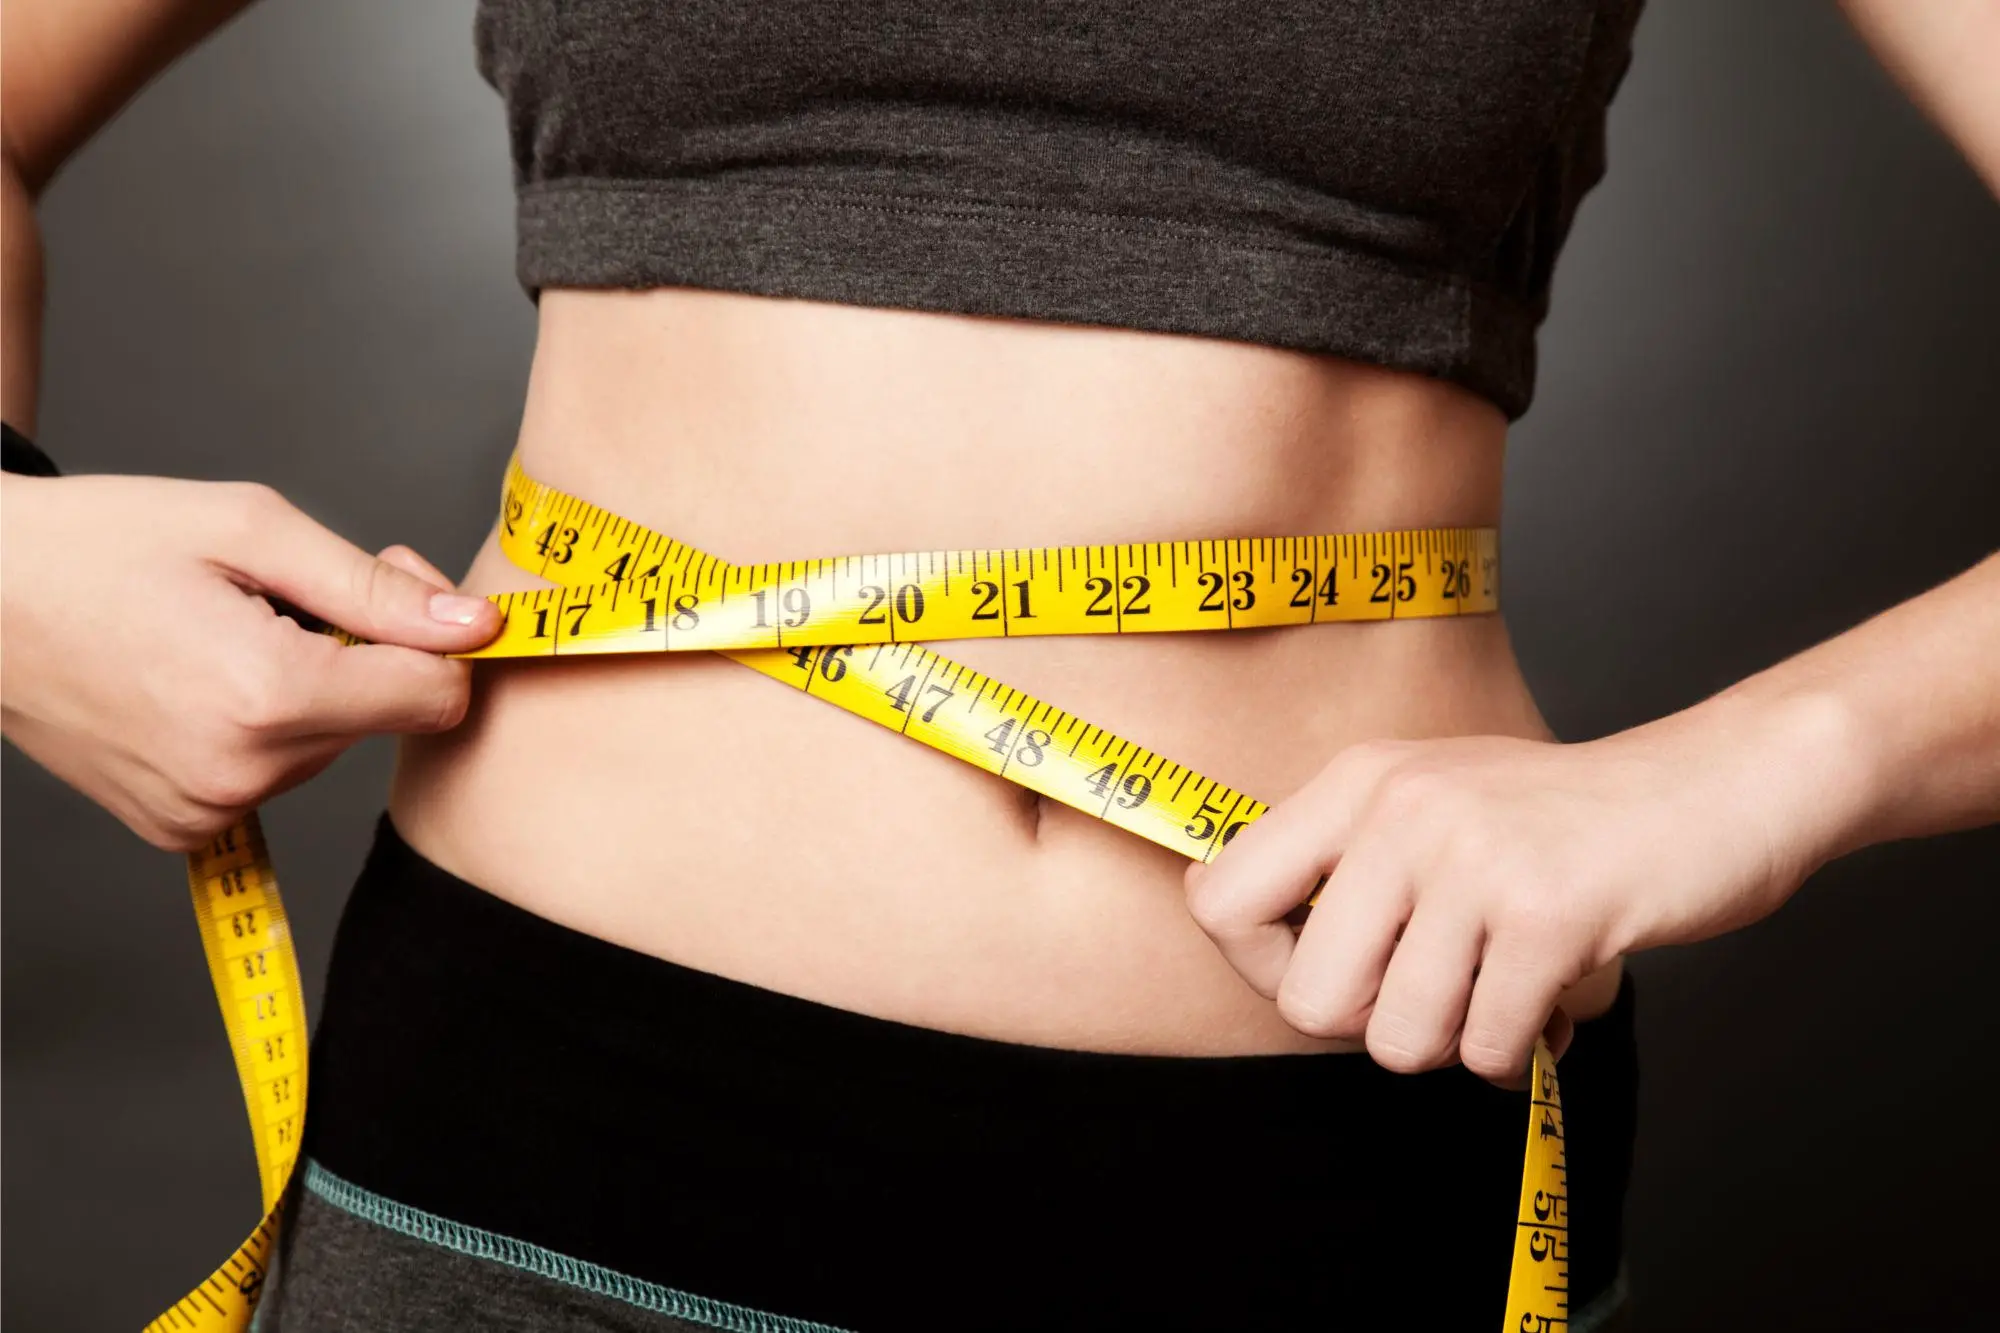 fast-weight-loss-diet-plan-to-lose-5kg-in-5-days-sehatnagar-com